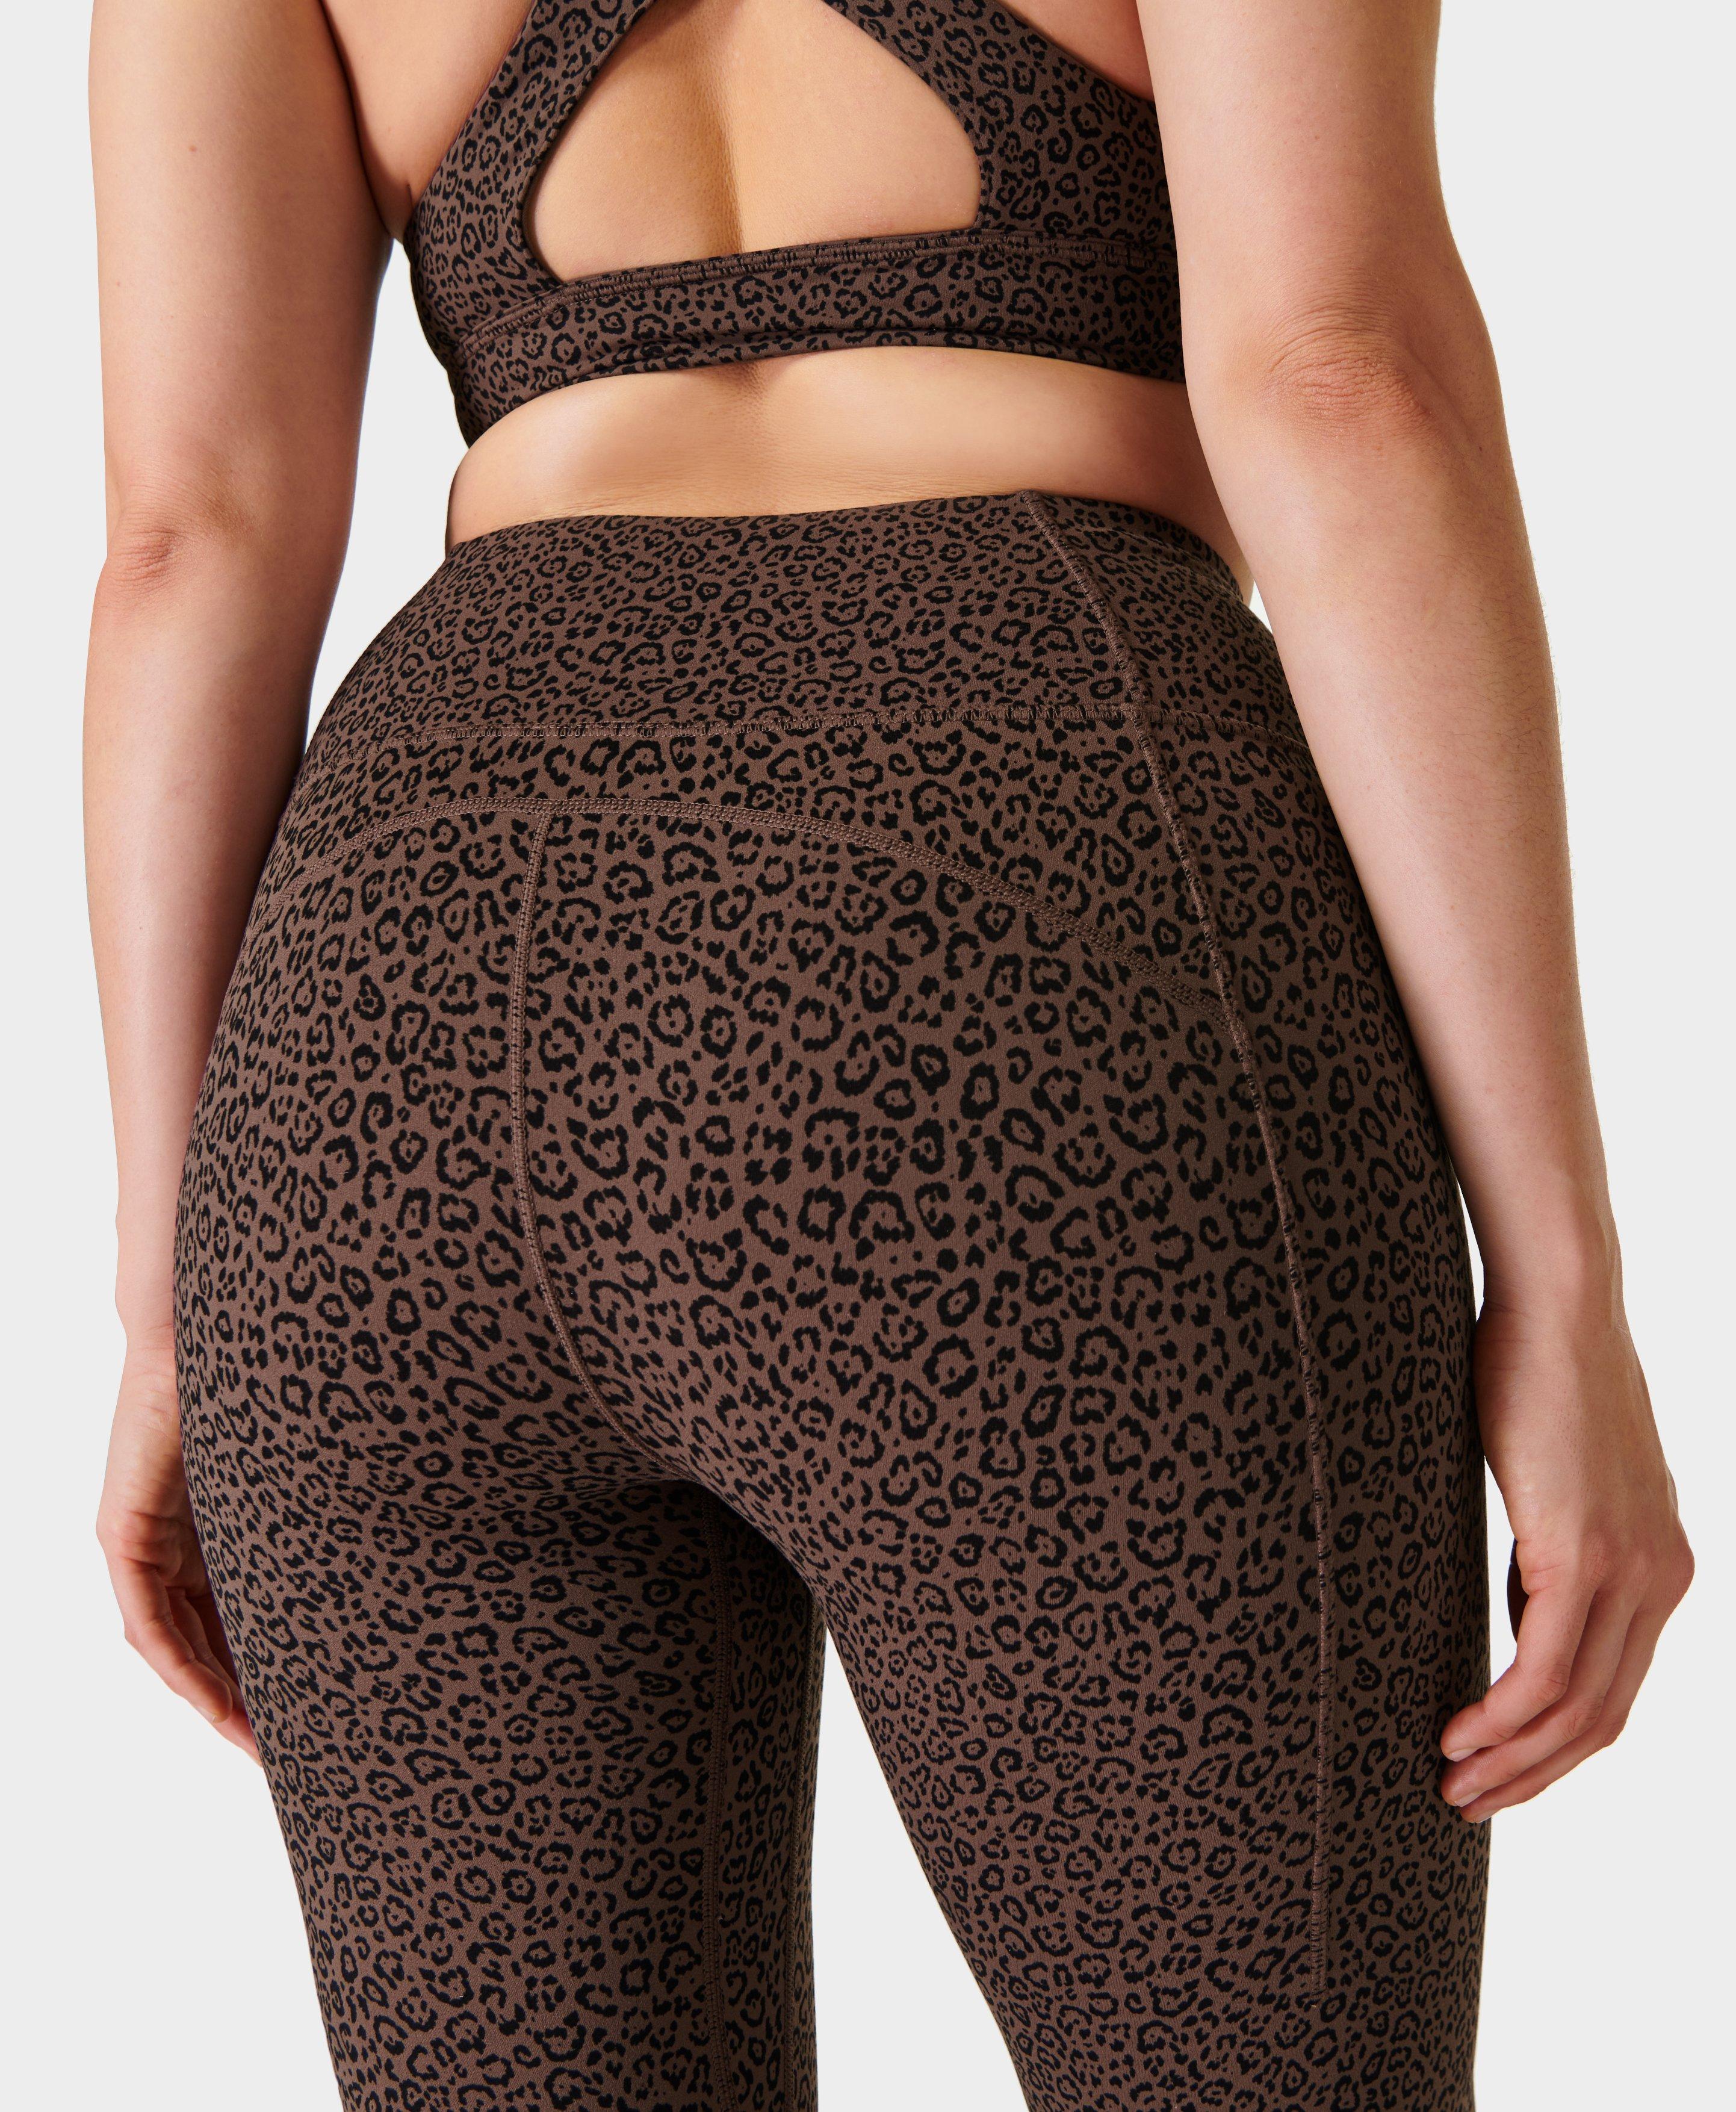  Leopard Print Leggings